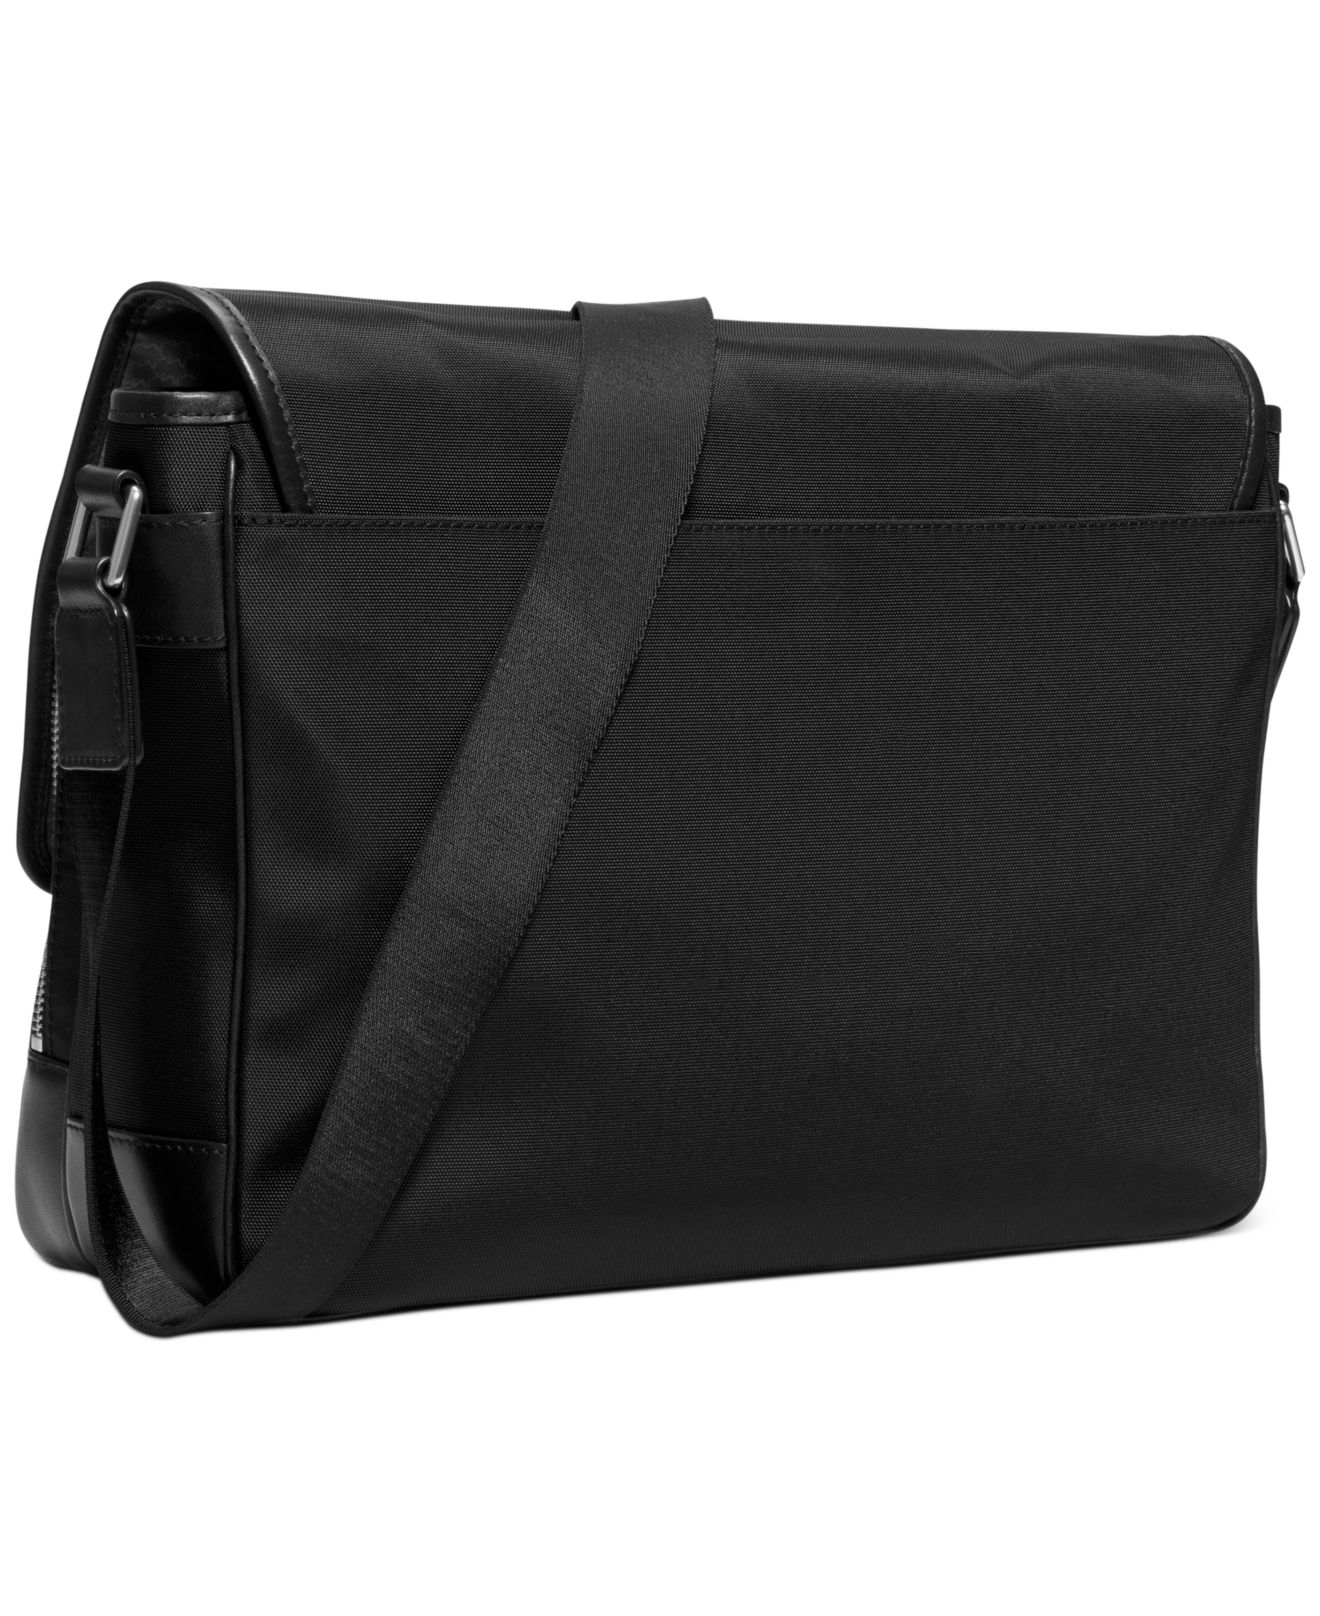 Michael Kors Windsor Large Messenger Bag in Black for Men - Lyst